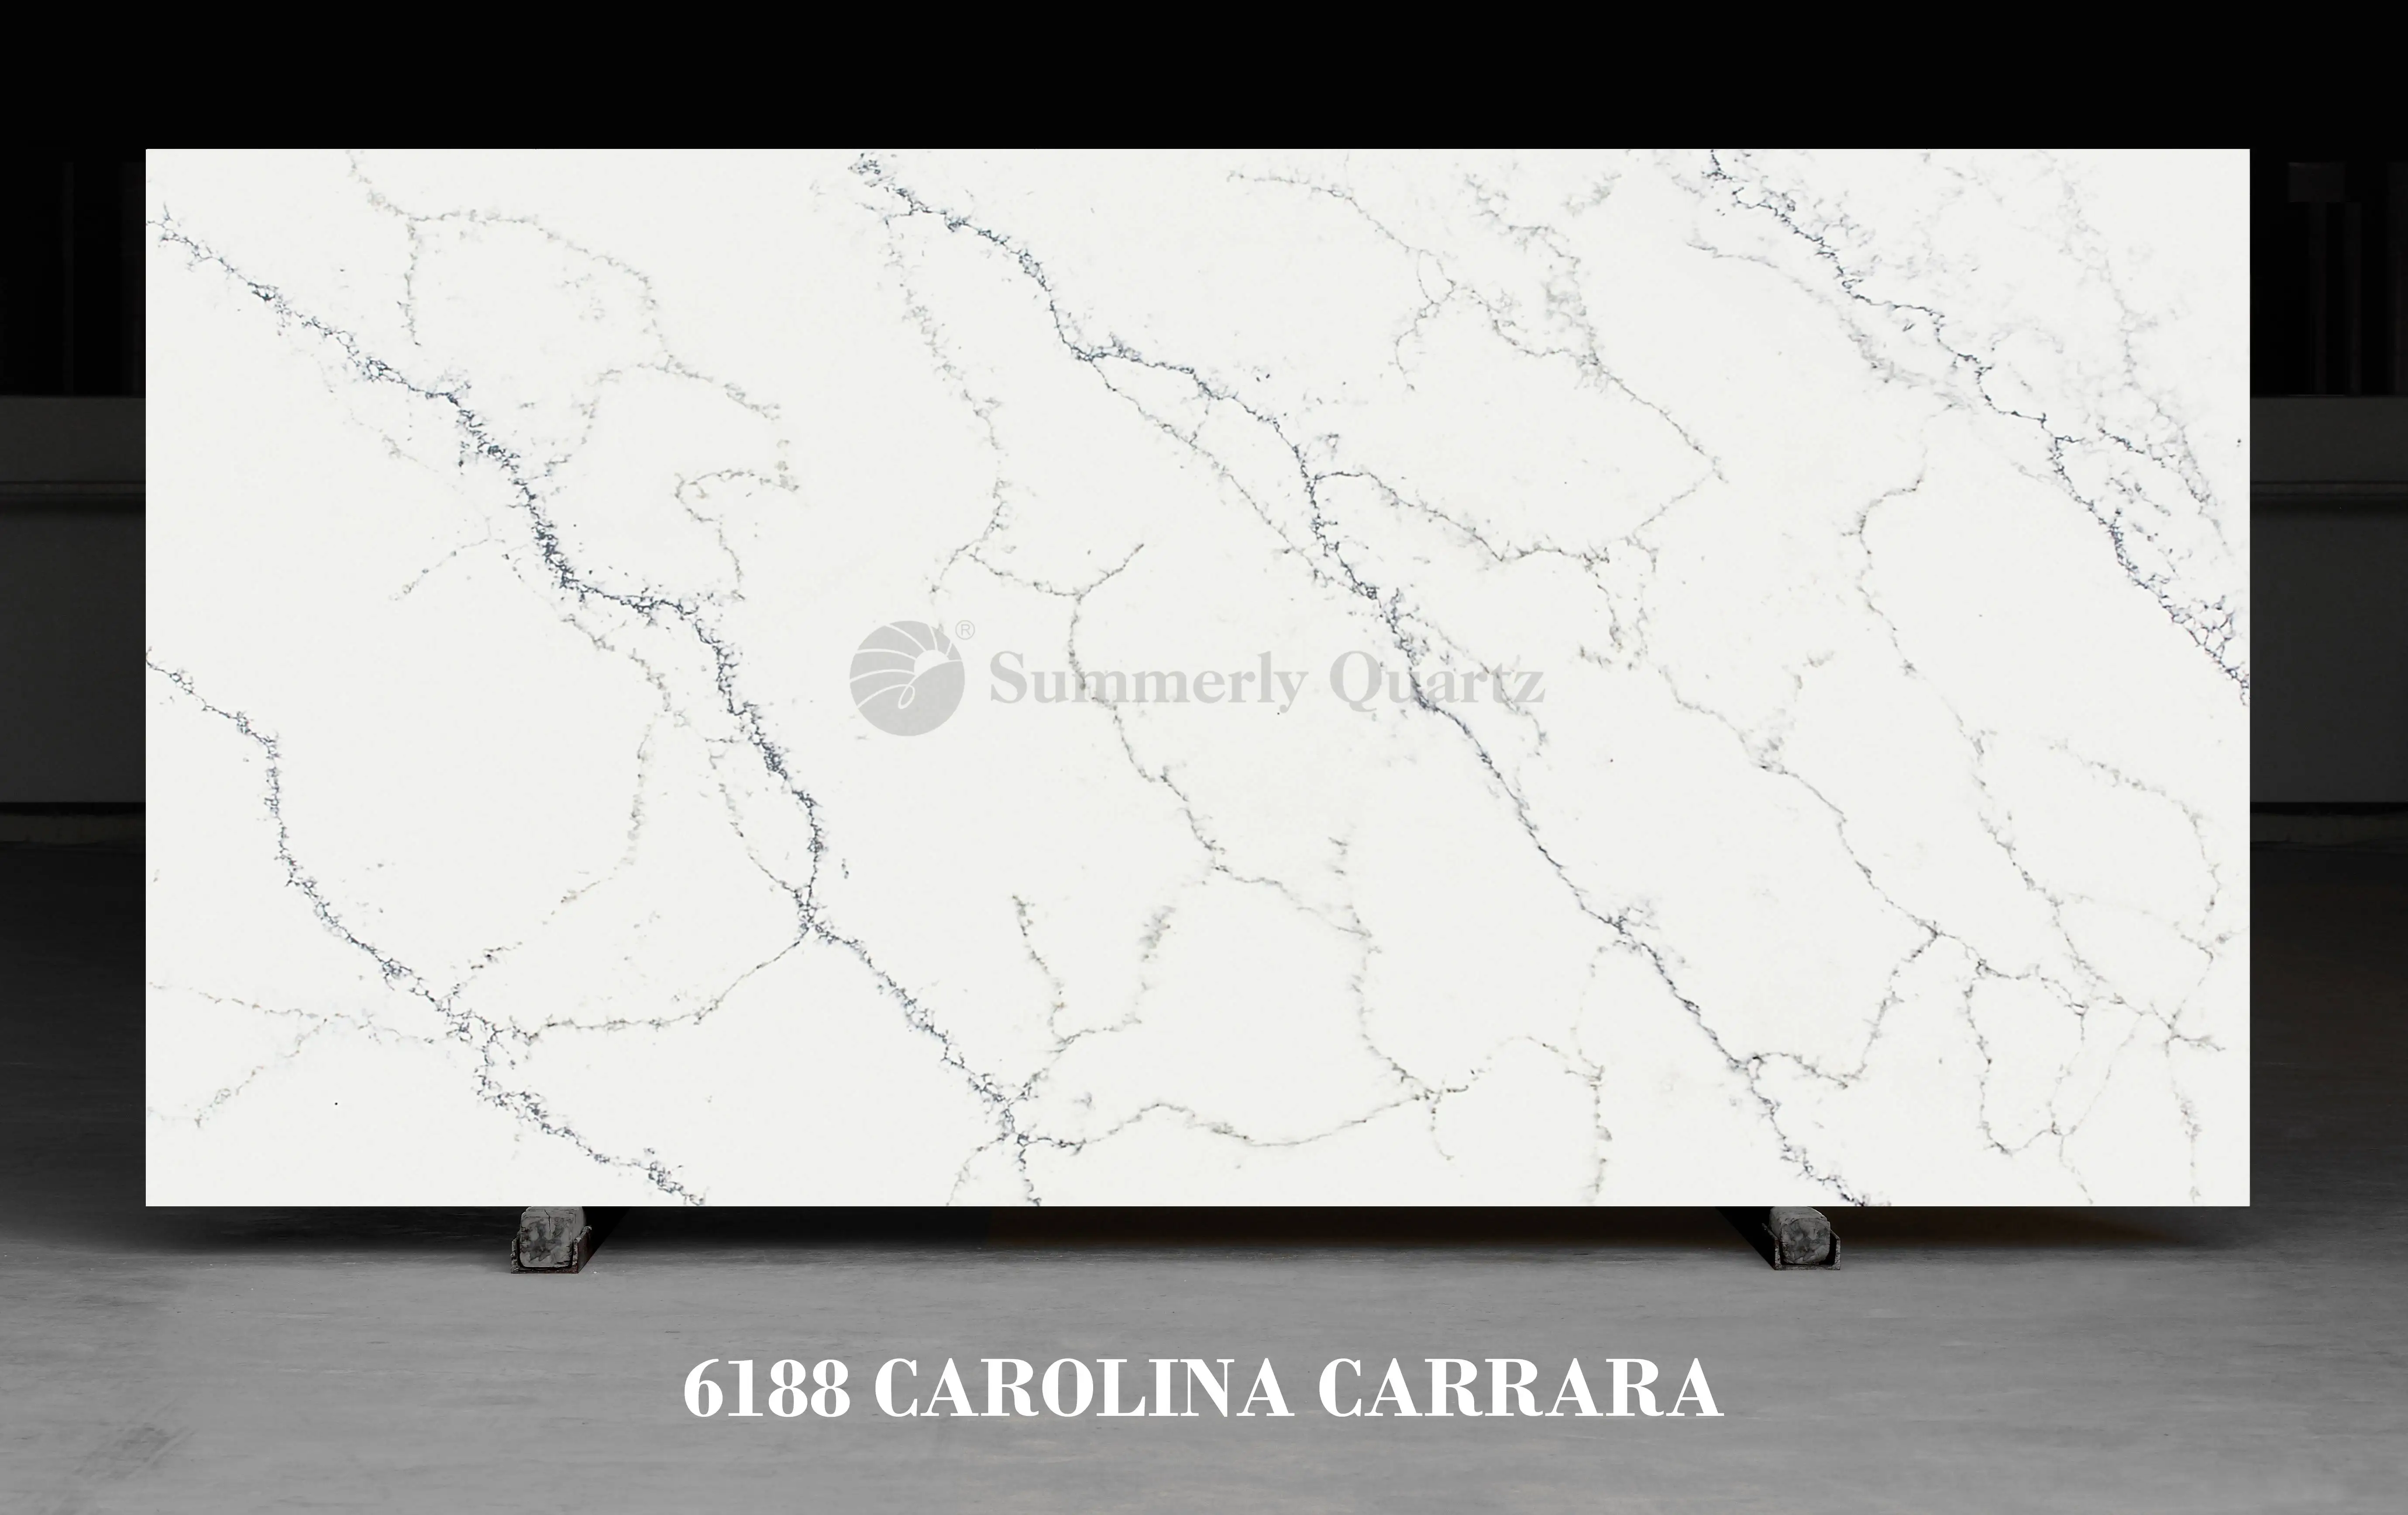 Cheap marble quartz stone white quartz slab artificial stone big slab and kitchen countertop